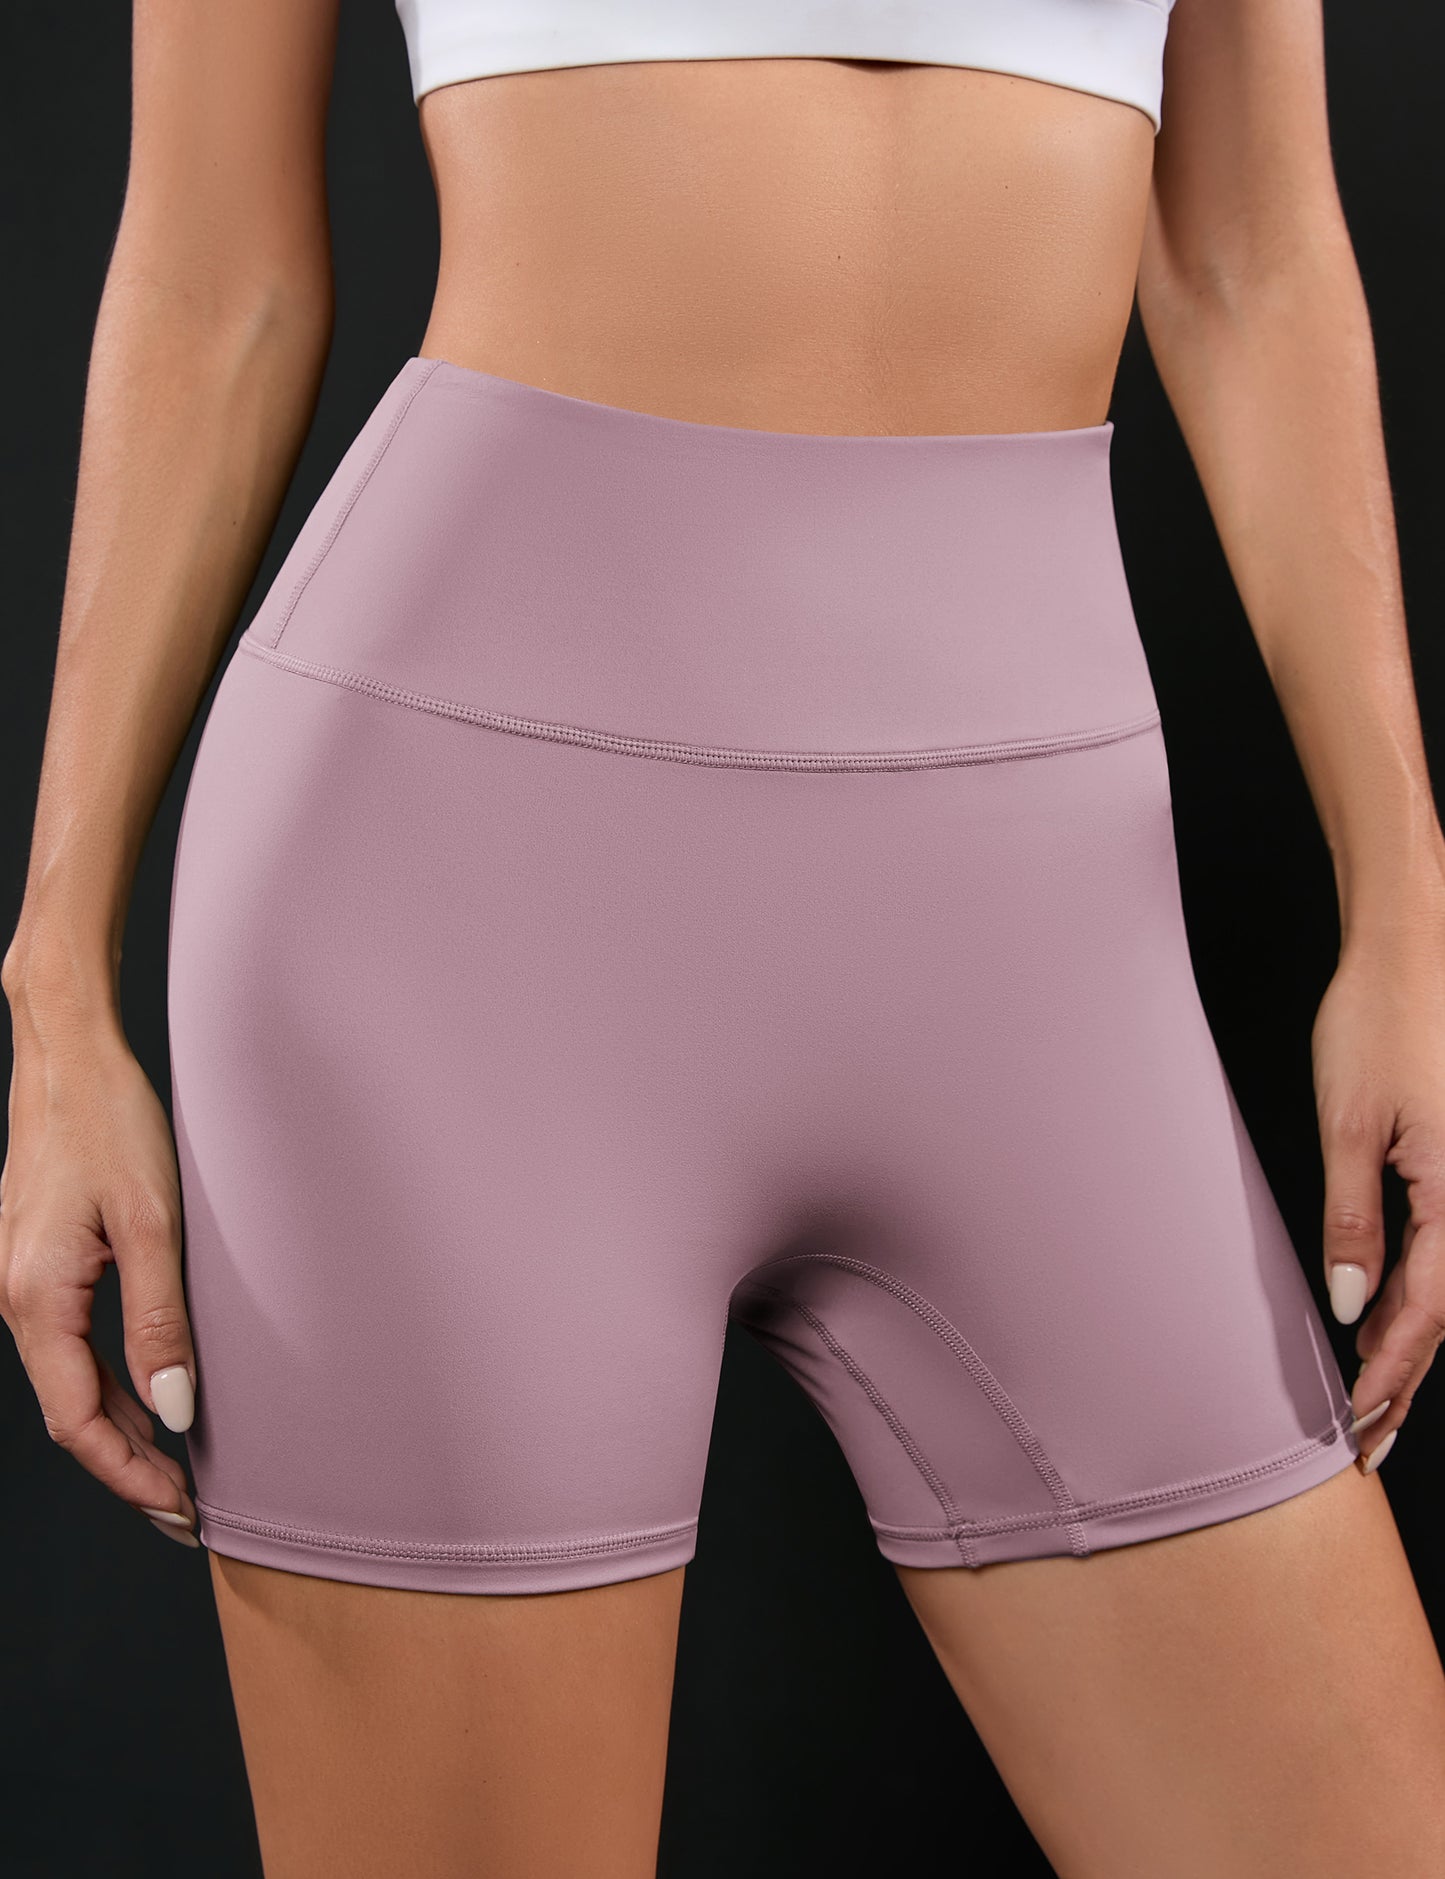 YESFASHION Women's Ruched Hip Lifting Tummy Yoga Shorts Purple